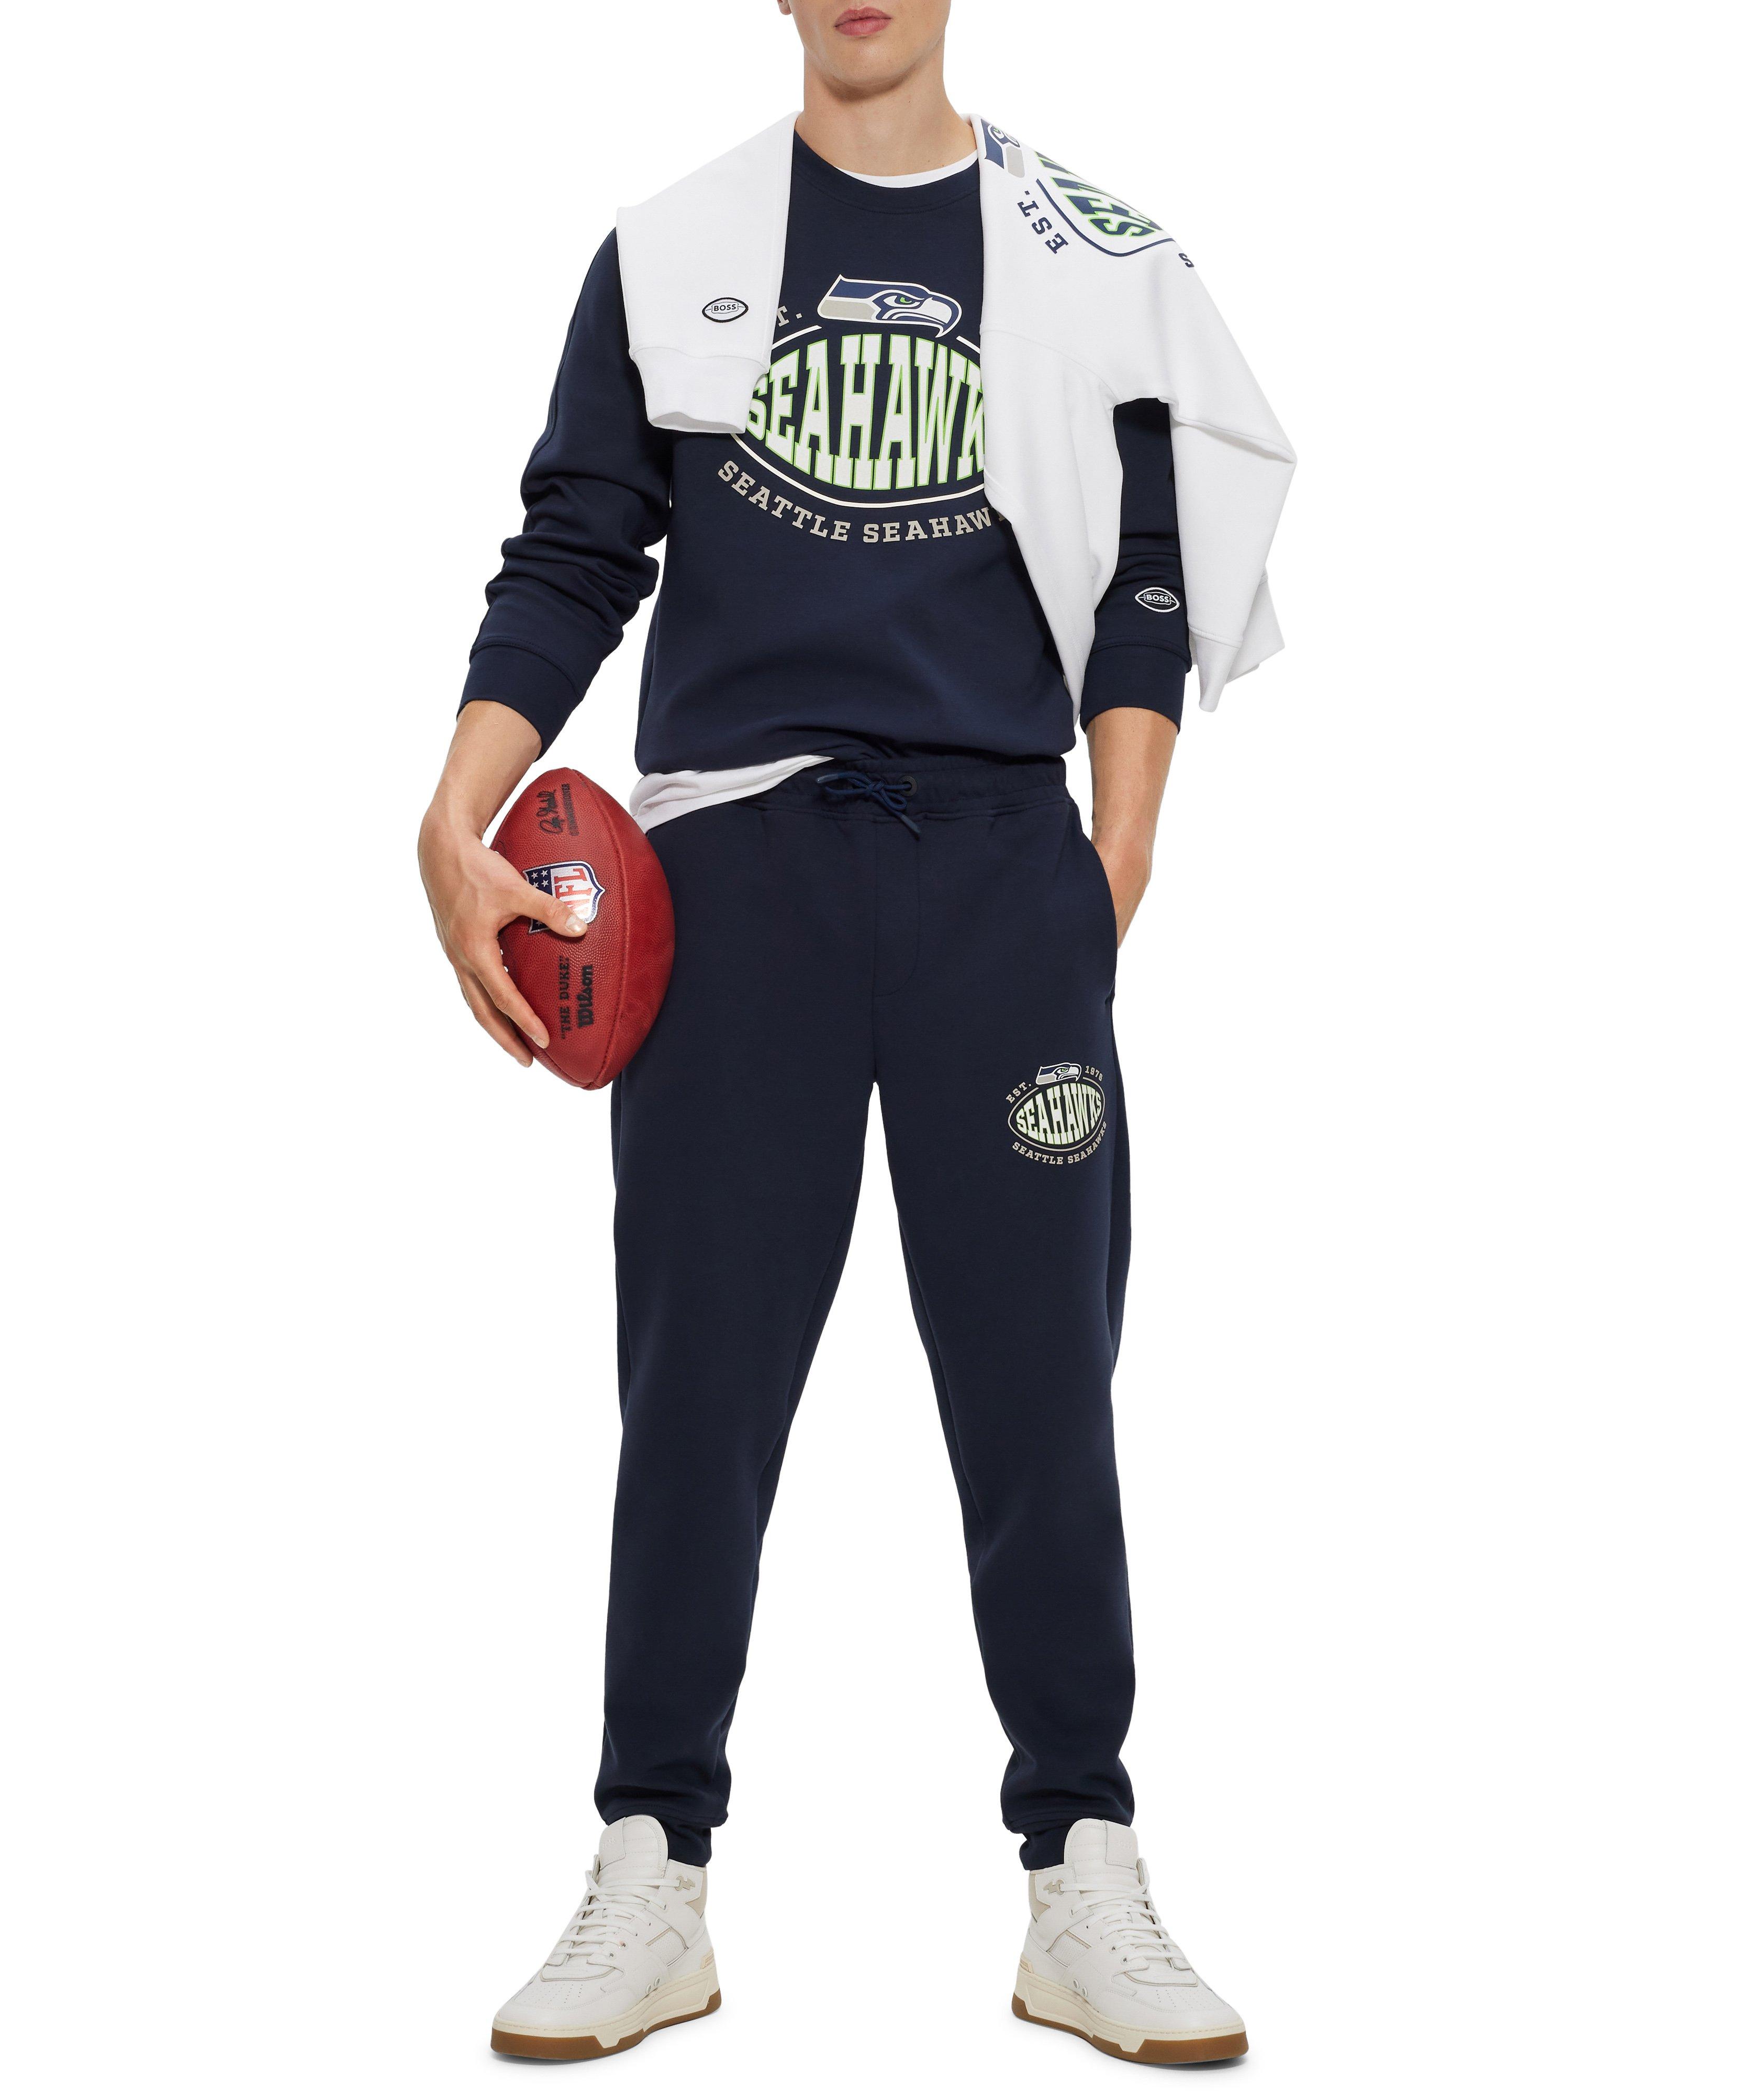 NFL Collection Seattle Seahawks Sweatshirt image 4